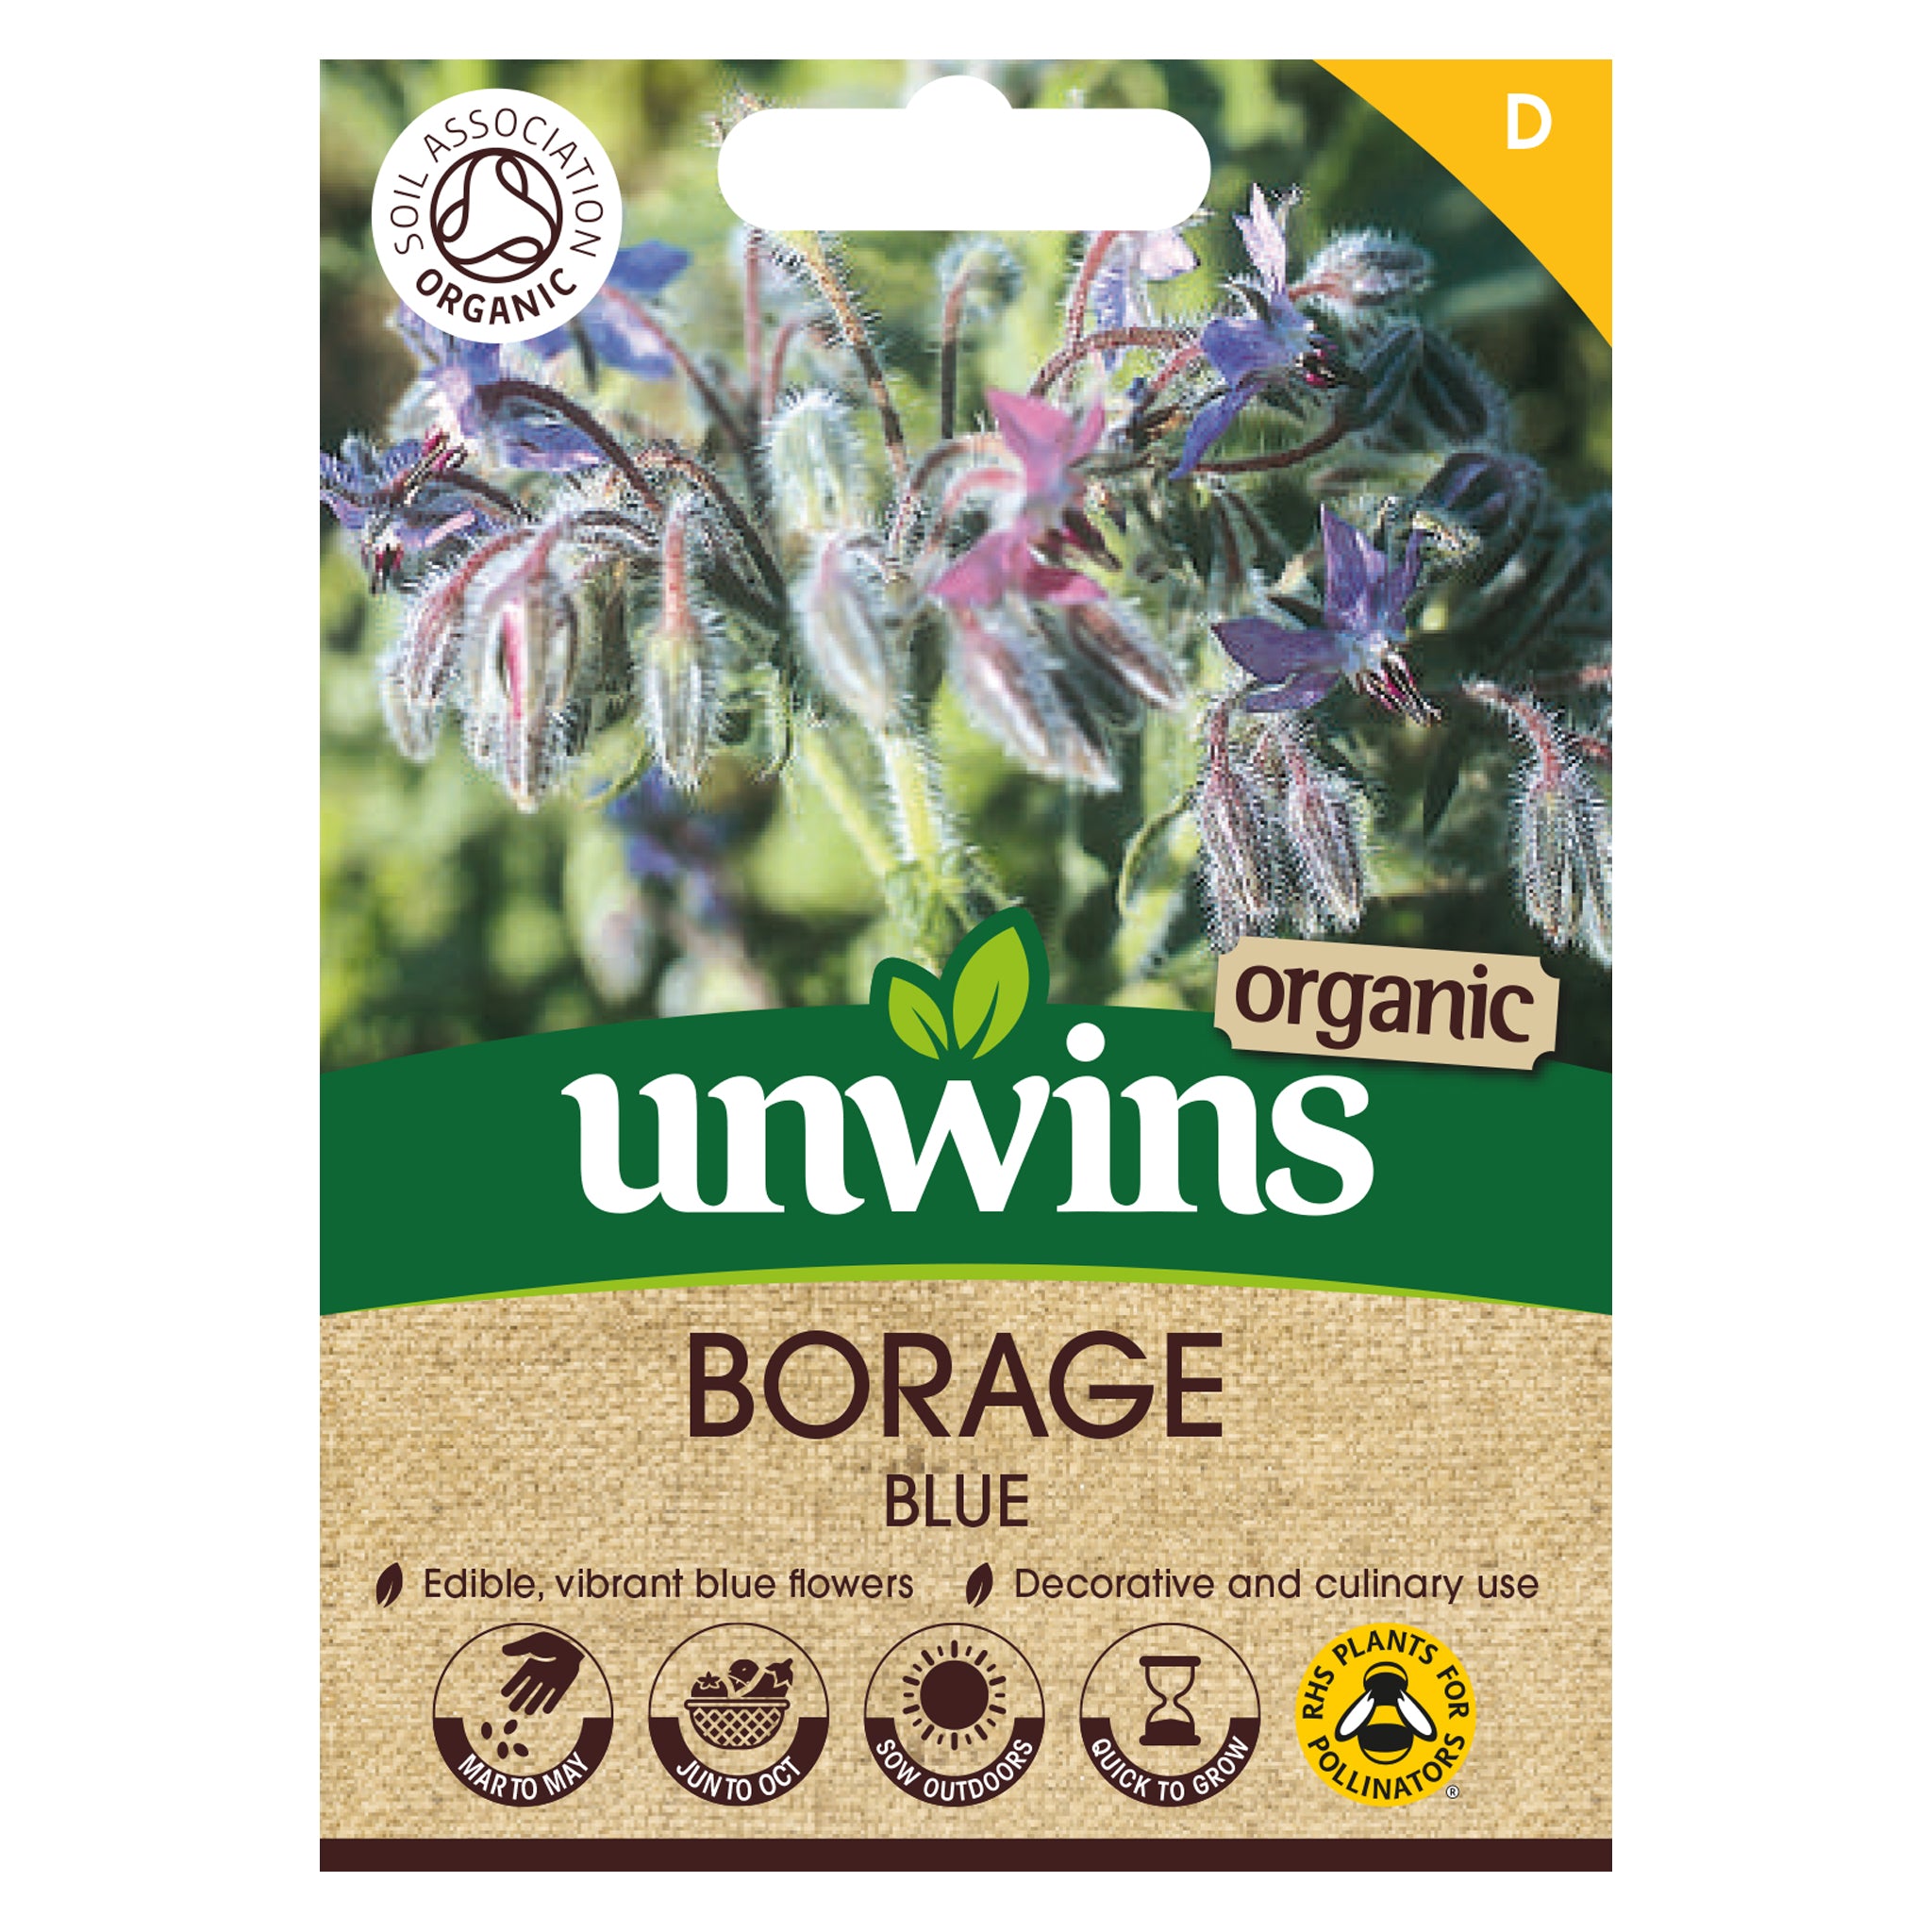 Unwins Organic Borage Blue Seeds